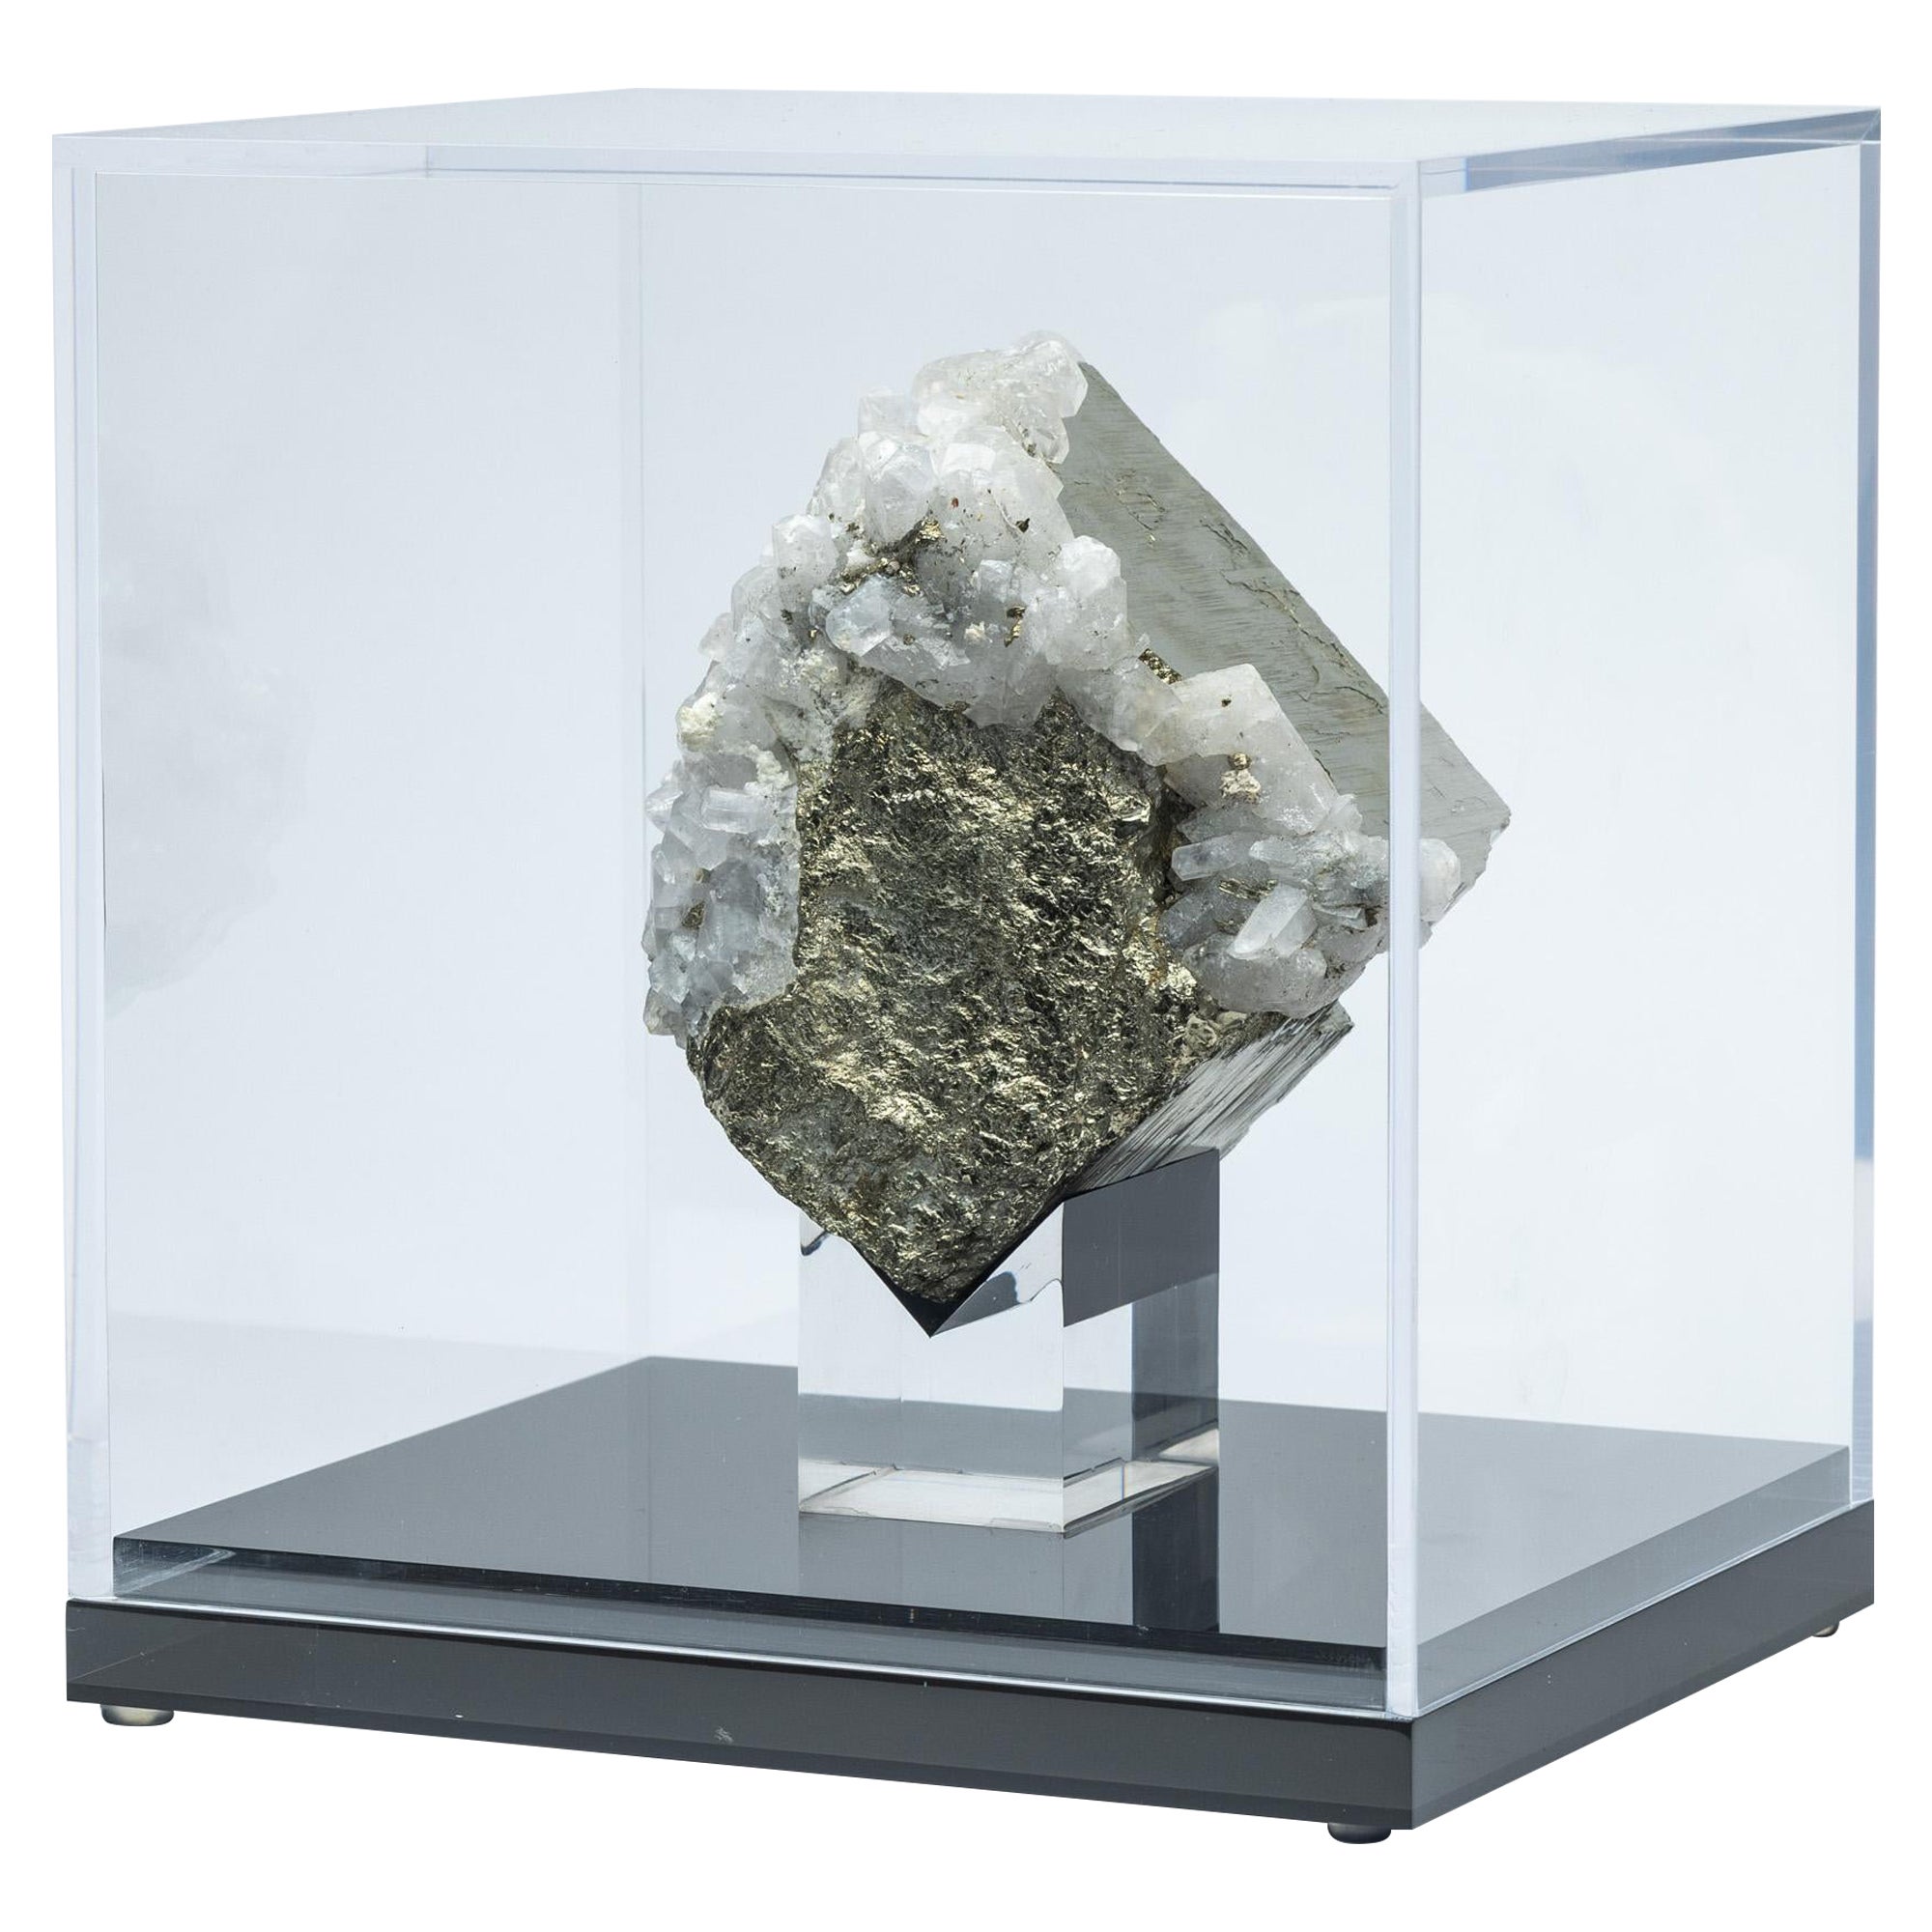 Natural Pyrite mounted on custom acrylic base